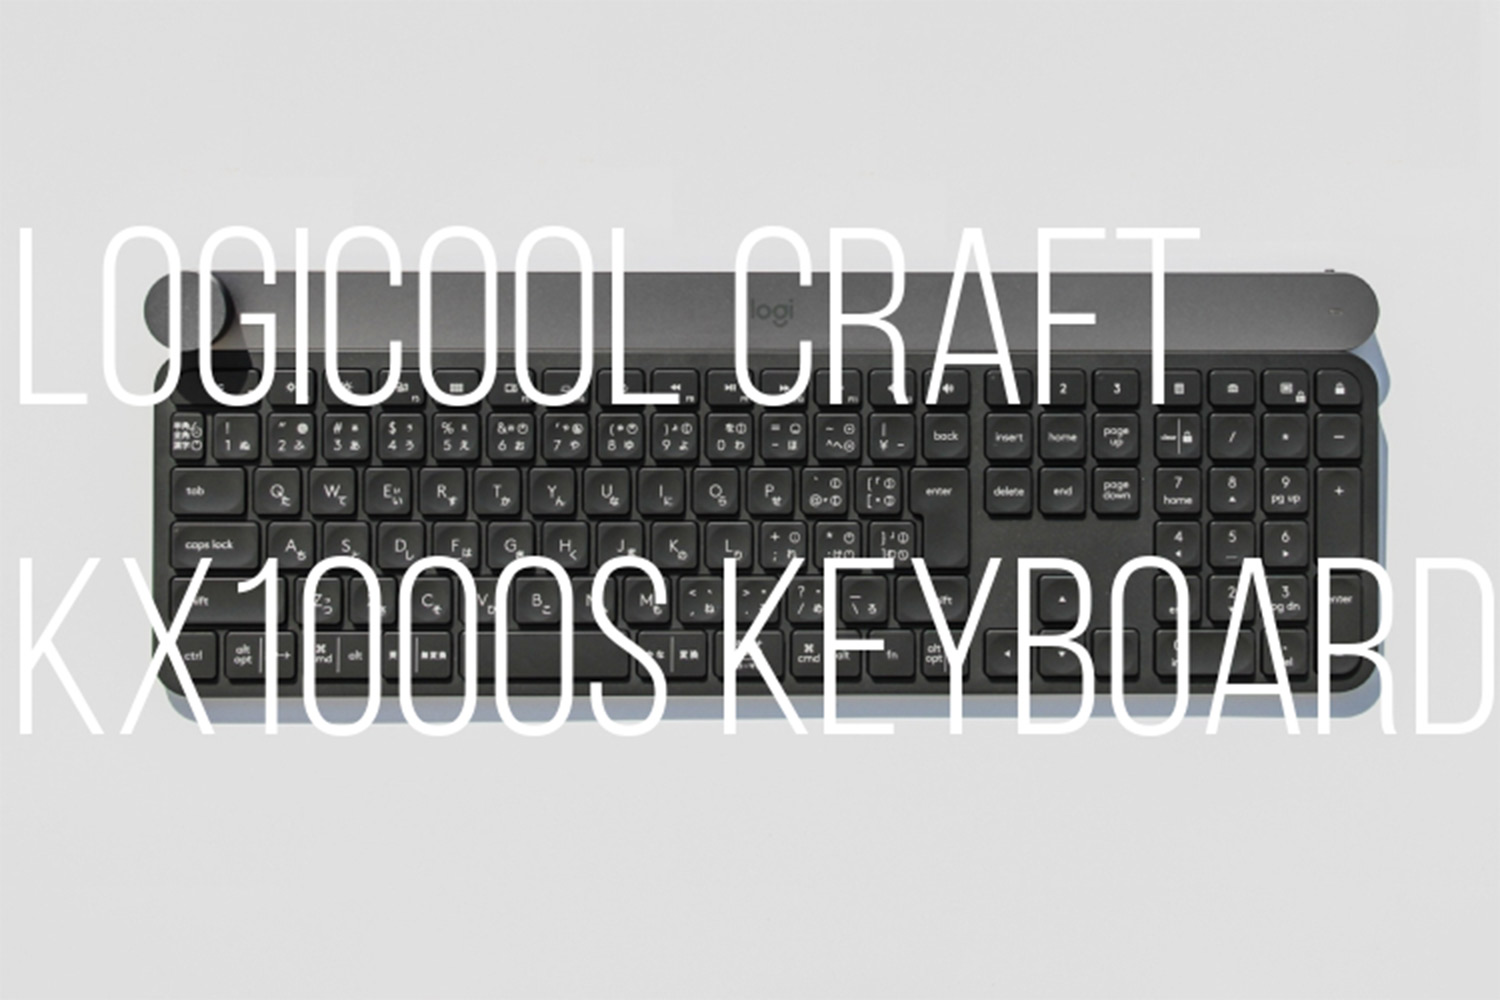 Logicool CRAFT KX1000s keyboard